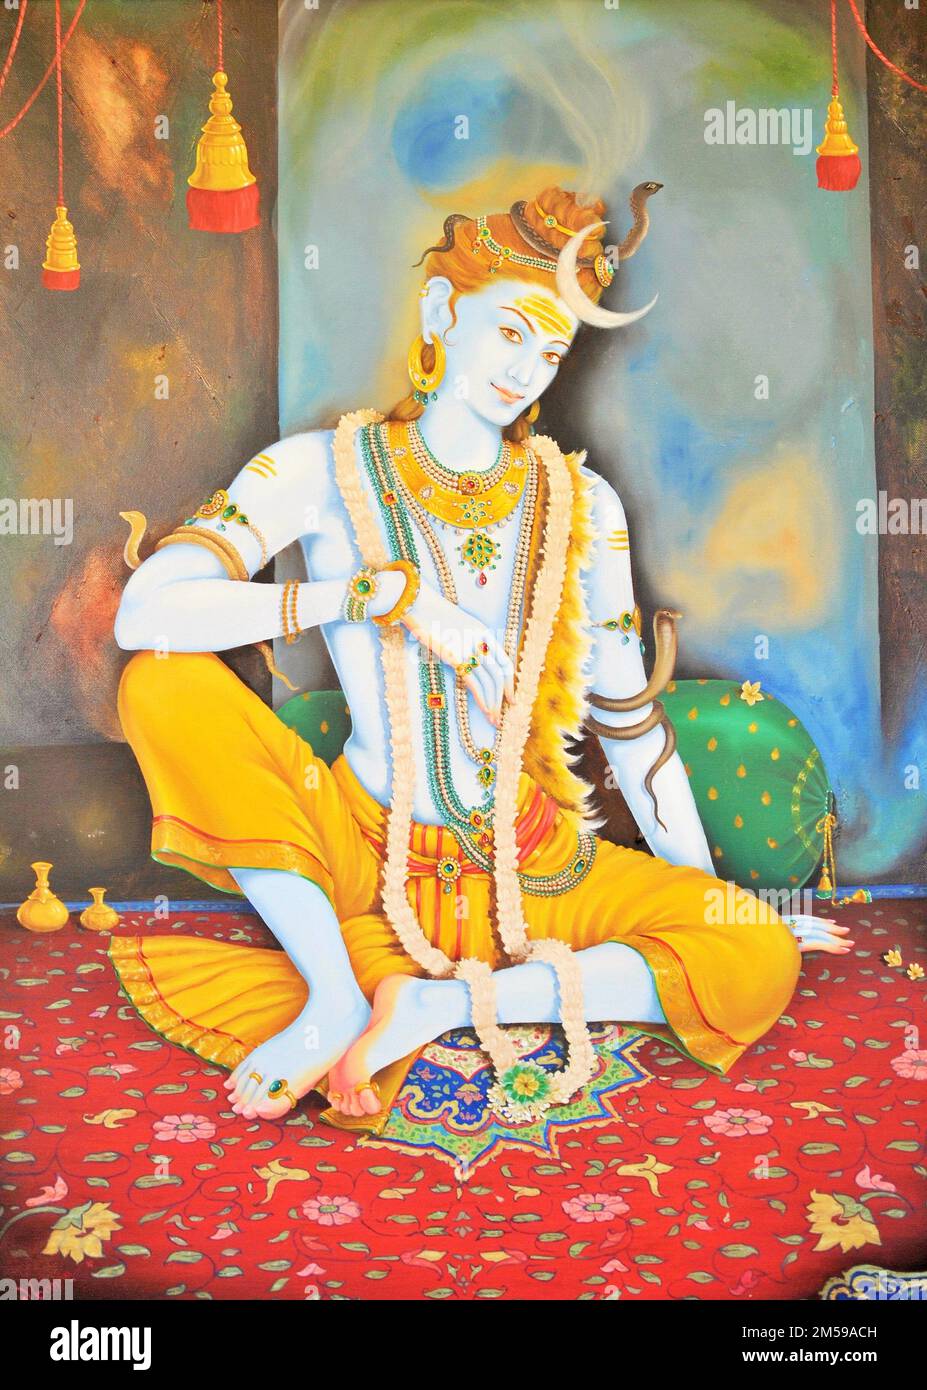 Lord Krishna as Shiva artwork painting Stock Photo